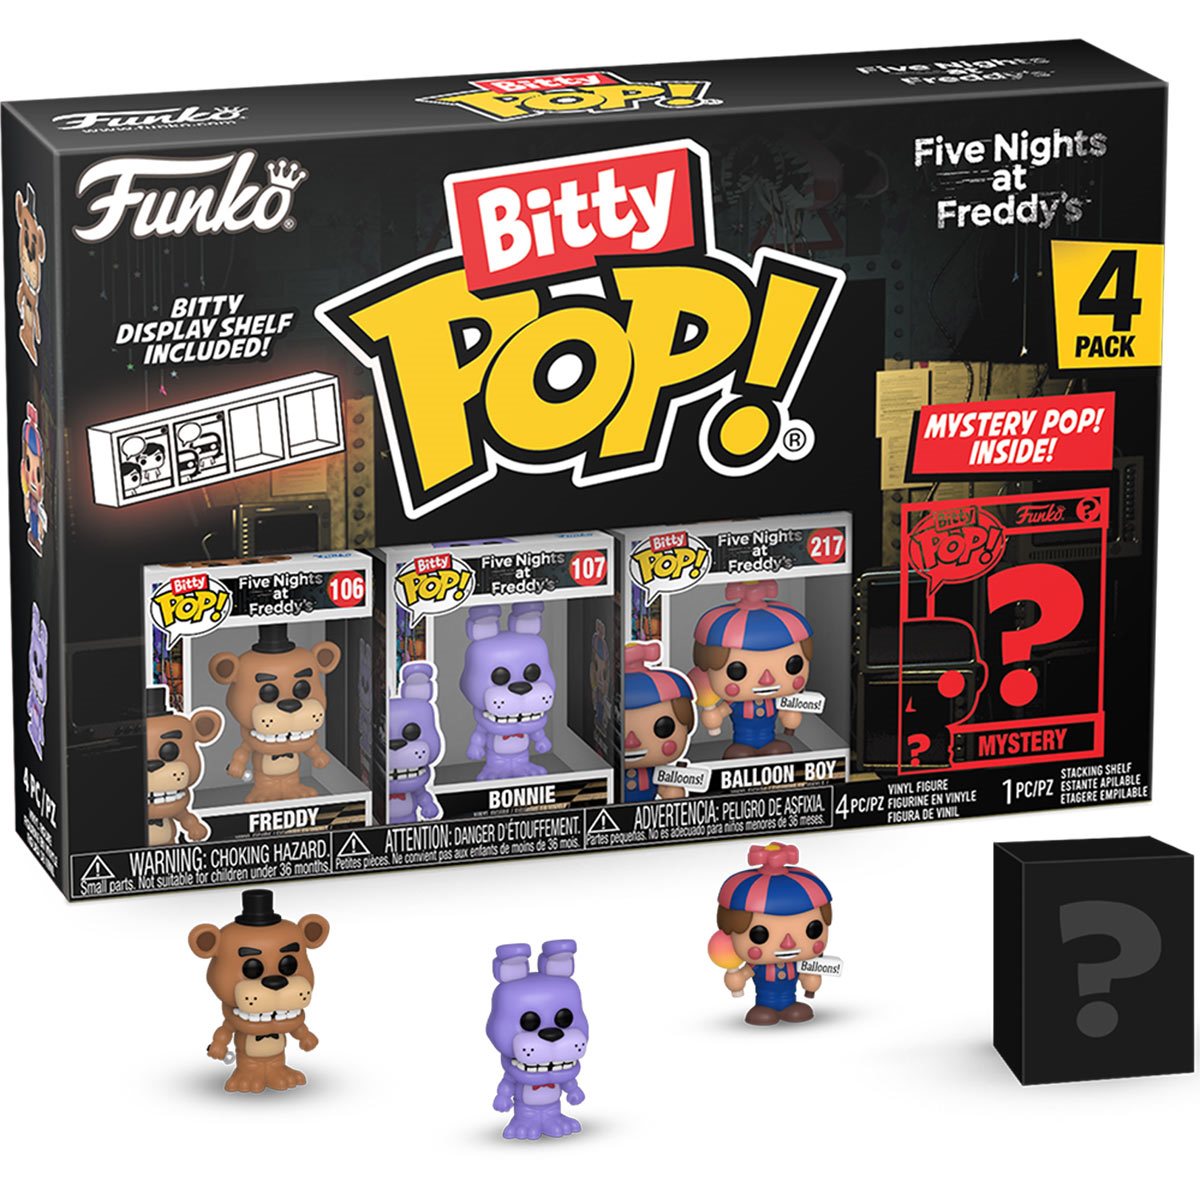 Funko Bitty Pop: Five Nights At Freddys - Freddy 4 Pack